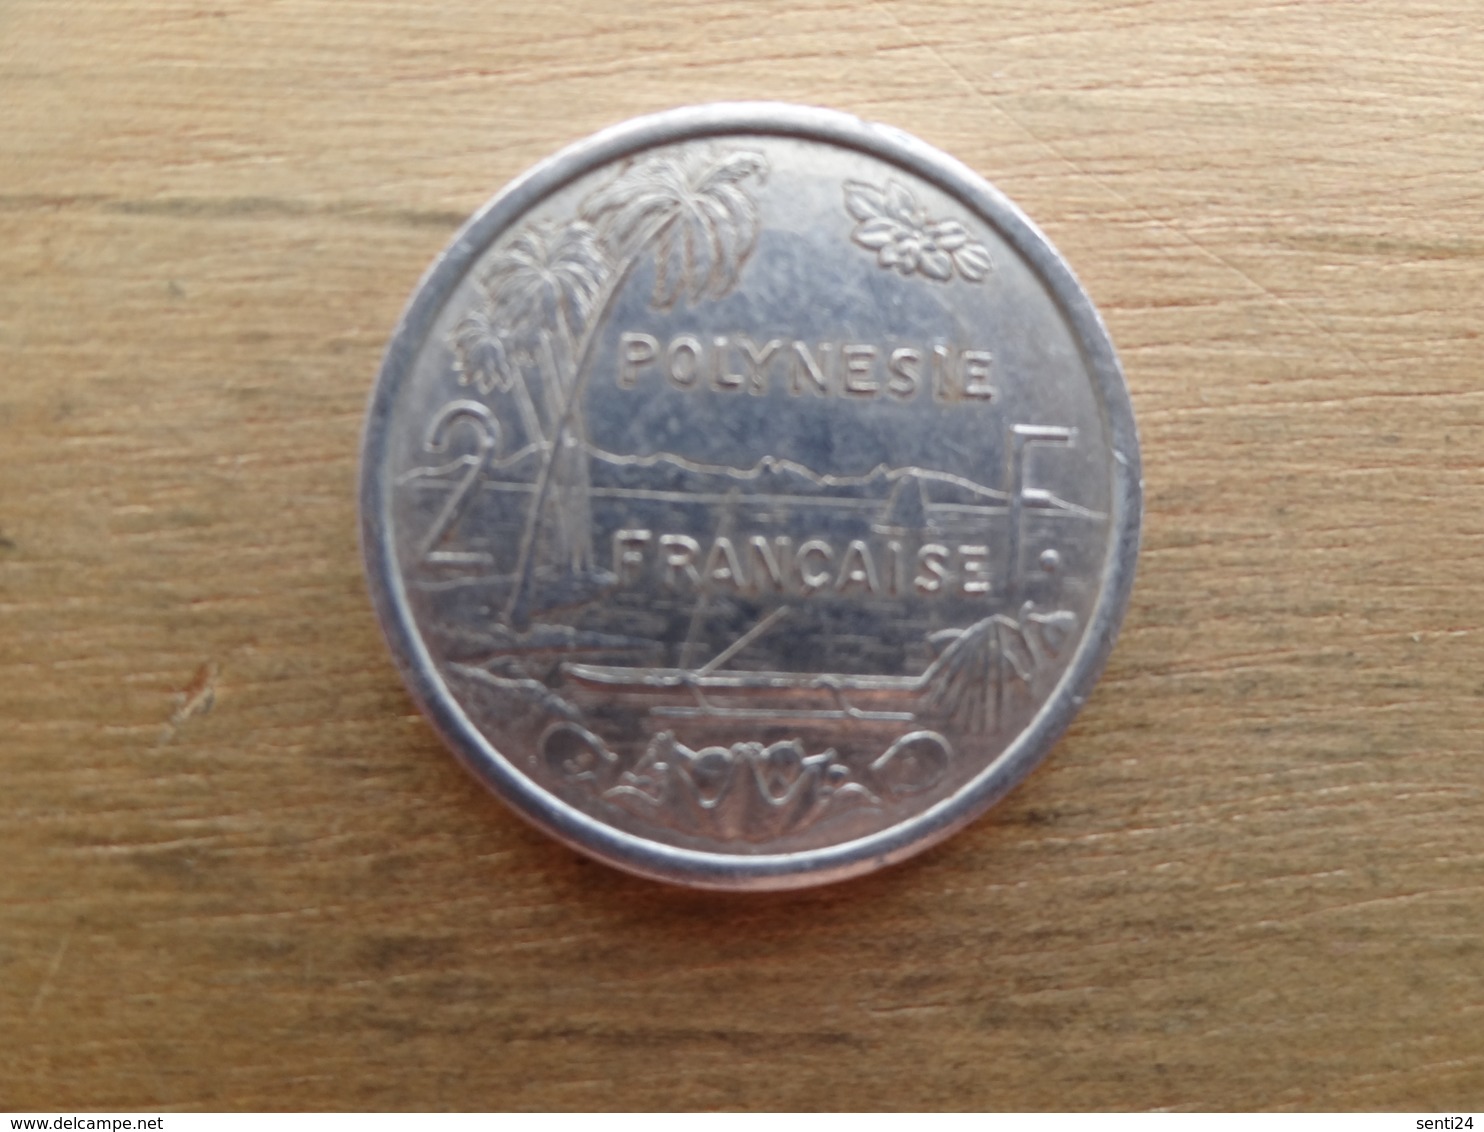 Polynesie Francaise  2  Francs  2003  Km 10 - French Polynesia